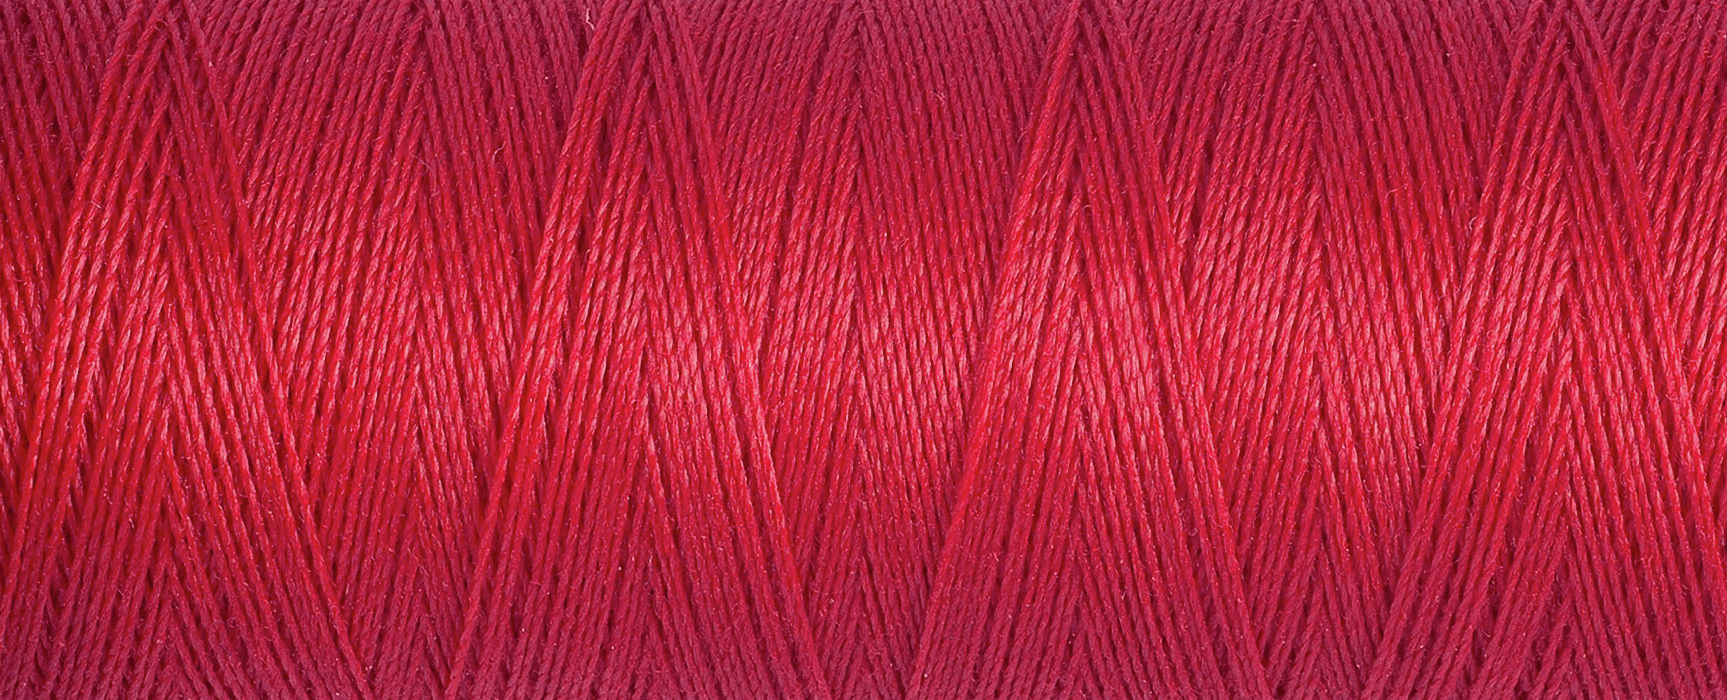 Gutermann Sew-All Thread - 100M (365)-Thread-Jelly Fabrics